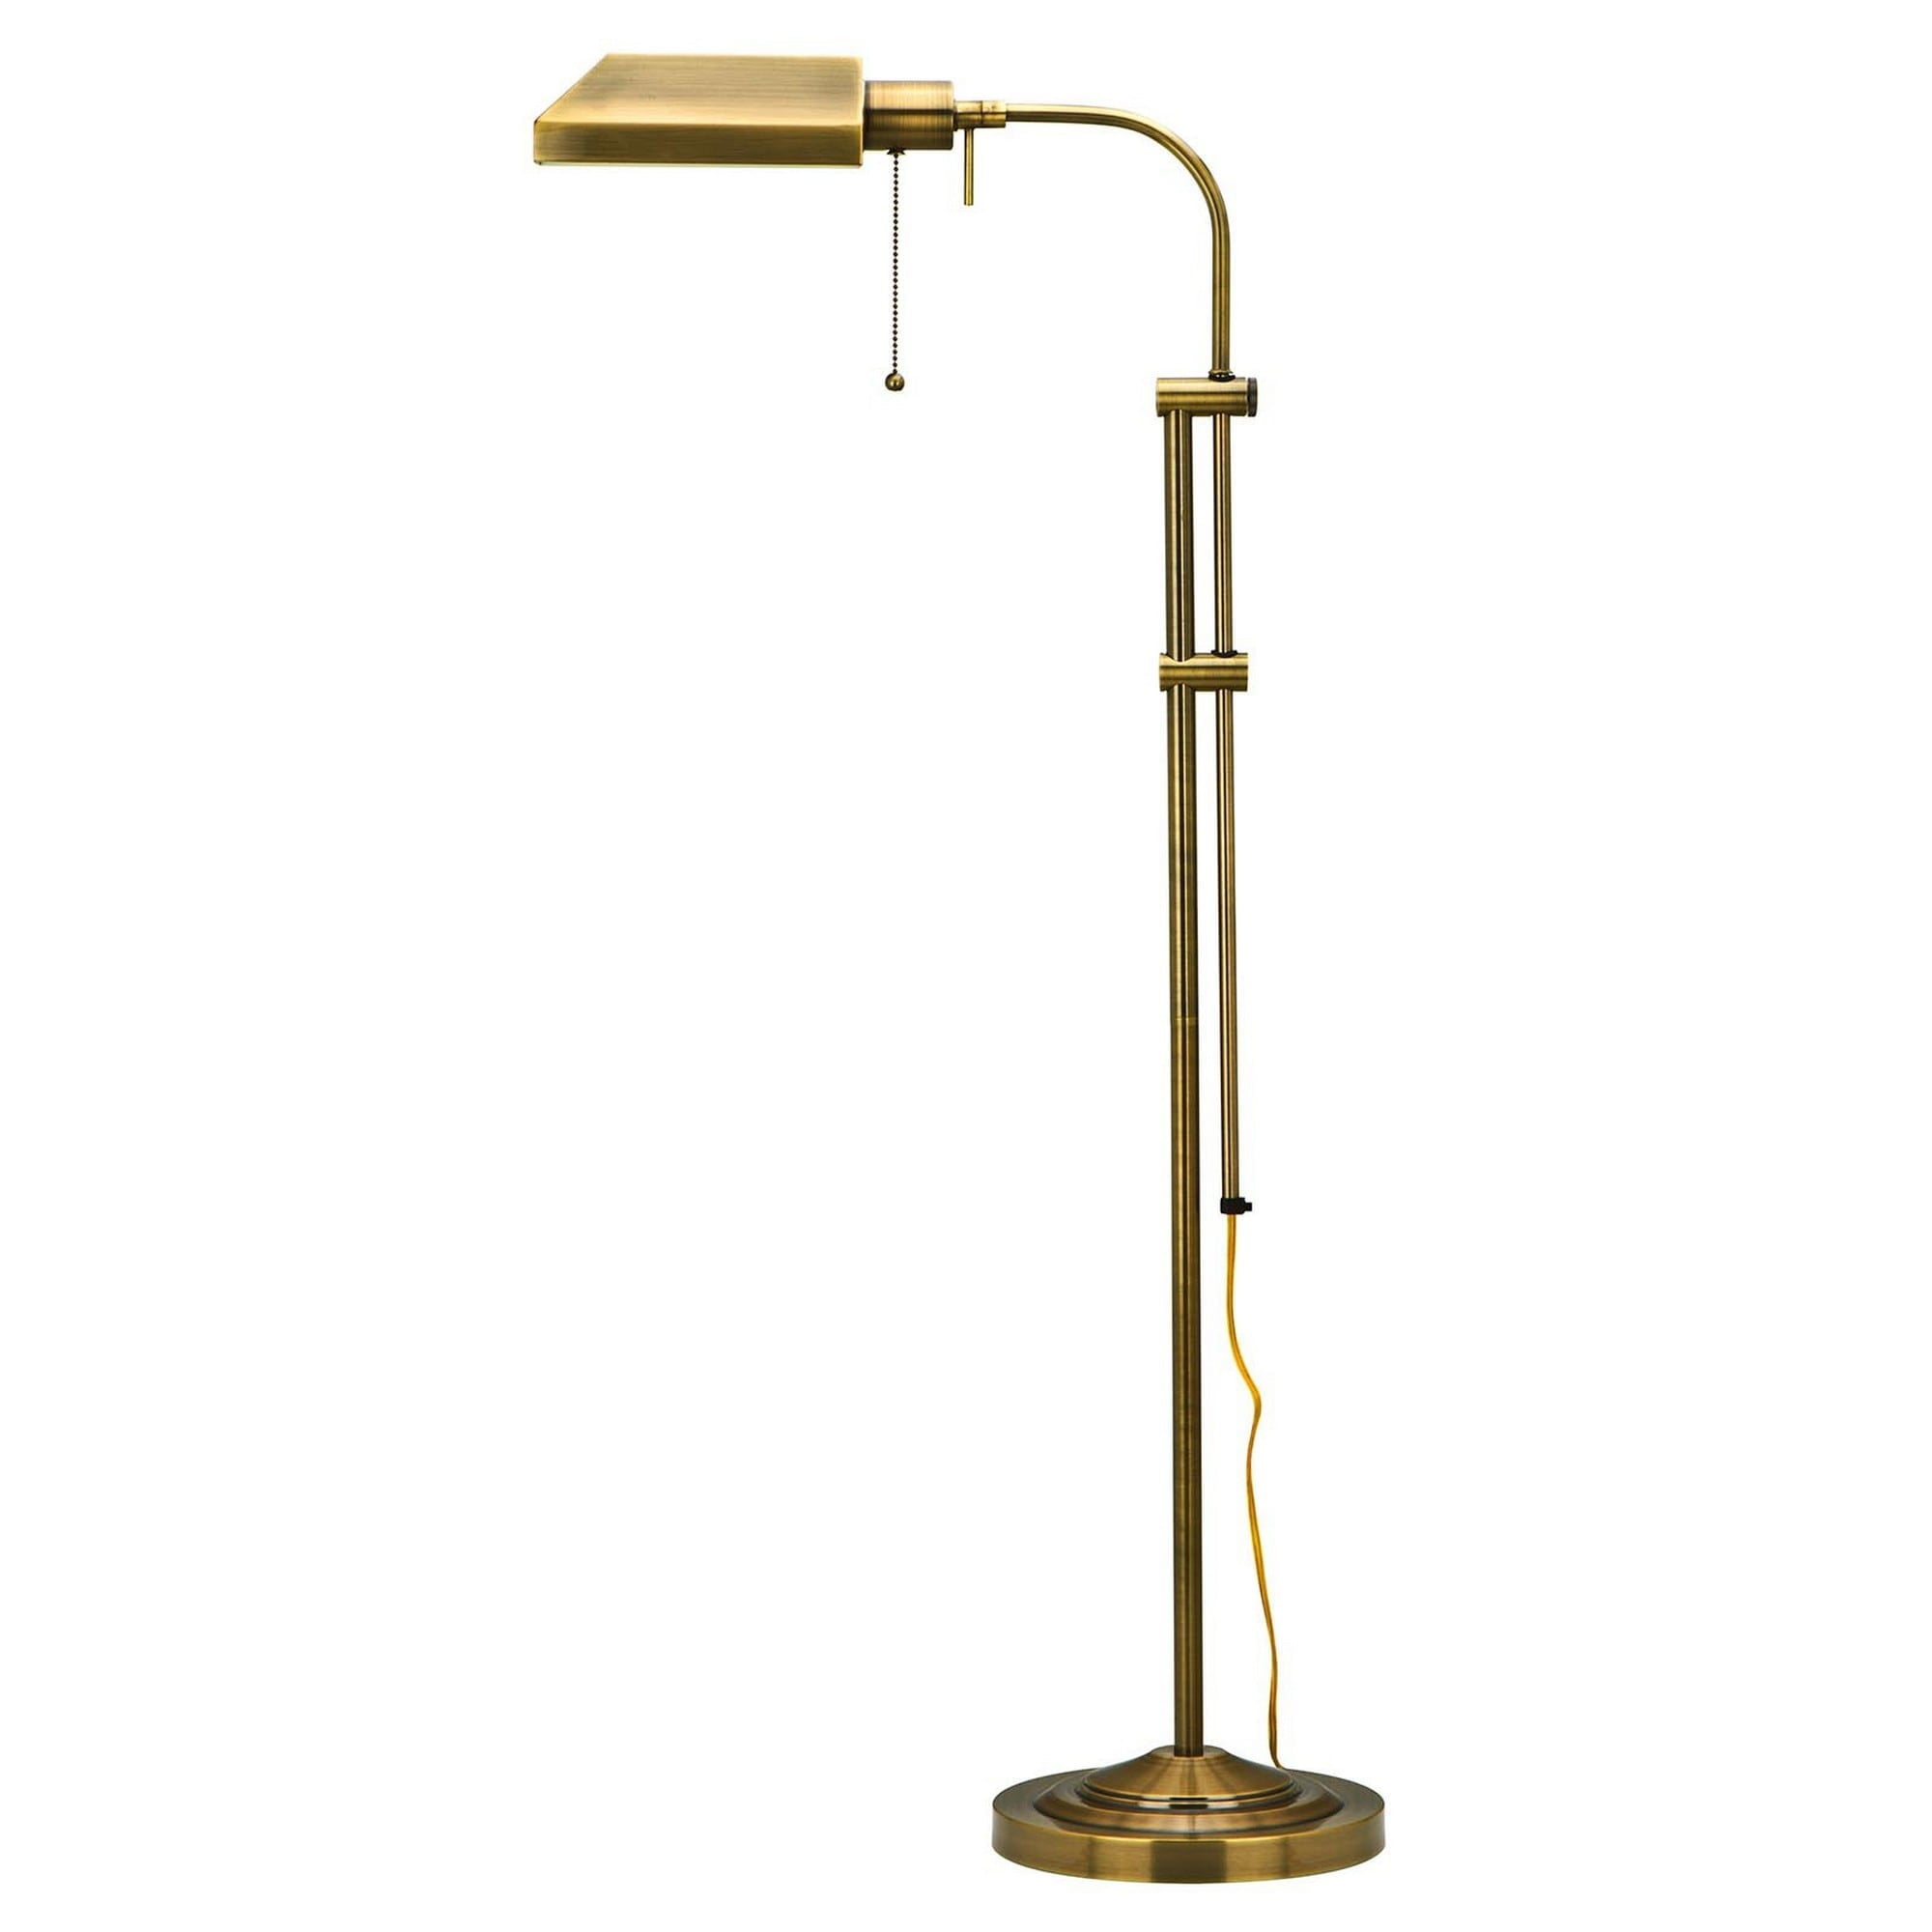 Picture of Benjara BM225079 Metal Rectangular Floor Lamp with Adjustable Pole, Gold